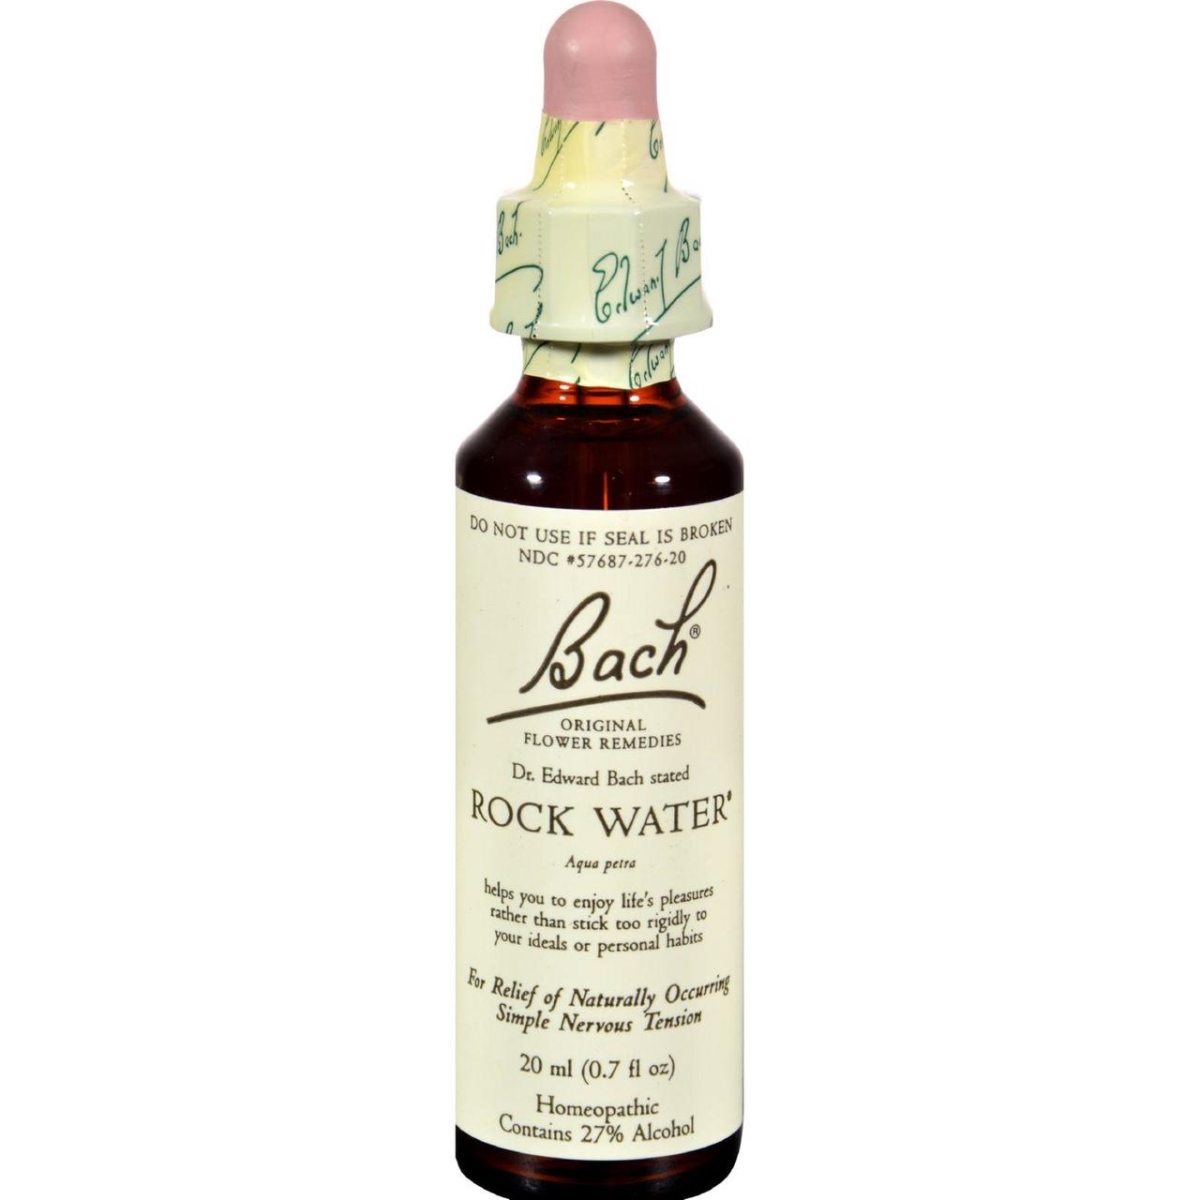 Hg0233932 0.7 Fl Oz Flower Remedies Essence, Rock Water